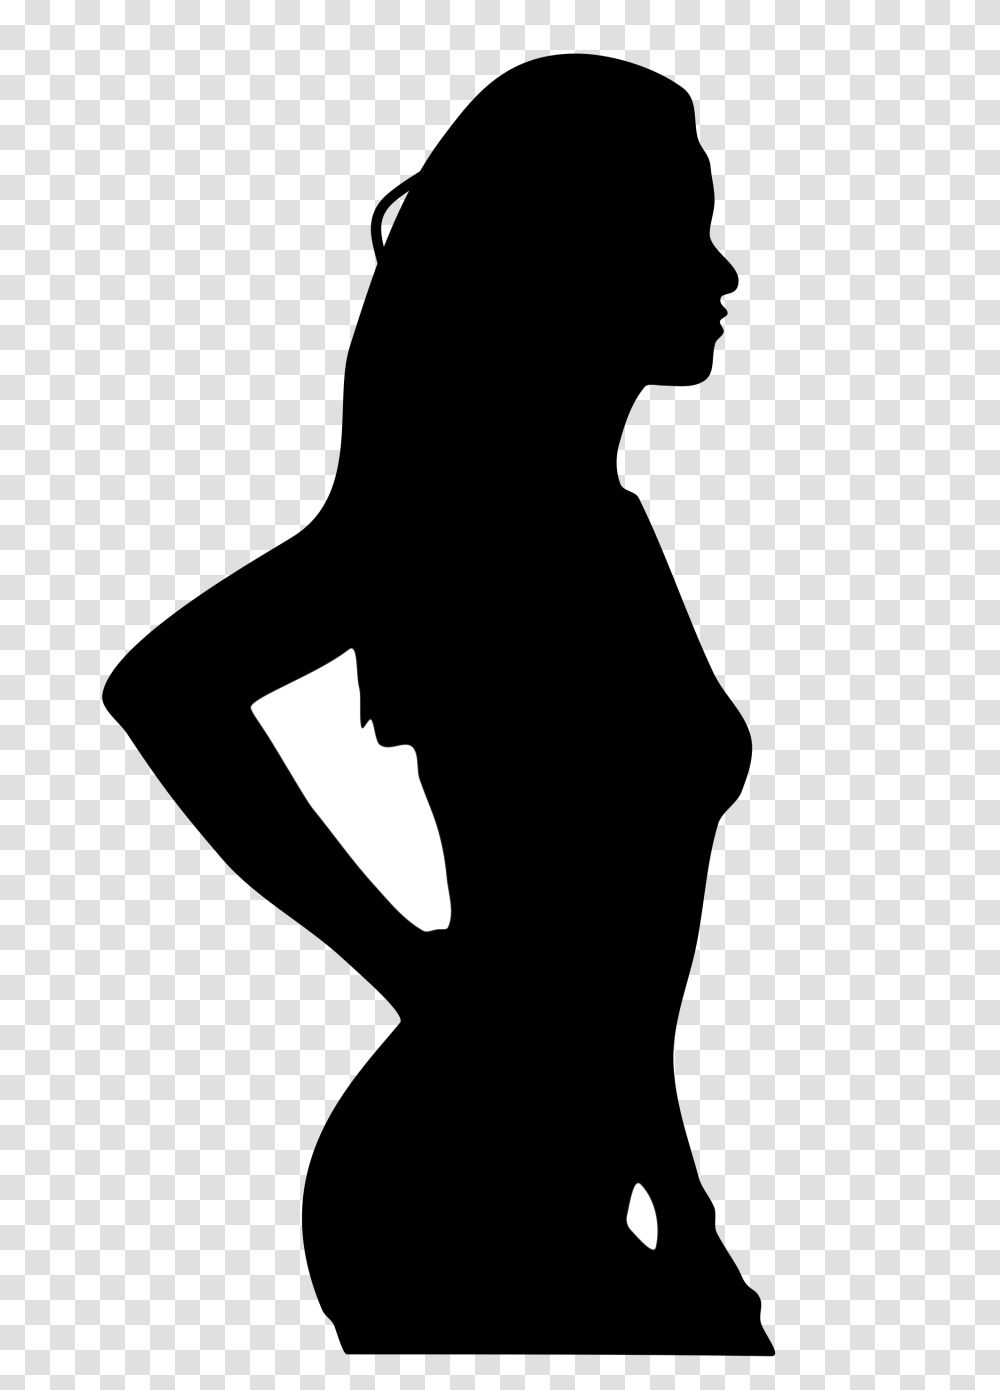 Silhouette Of Woman In Bikini, Triangle, Pillow, Cushion Transparent Png